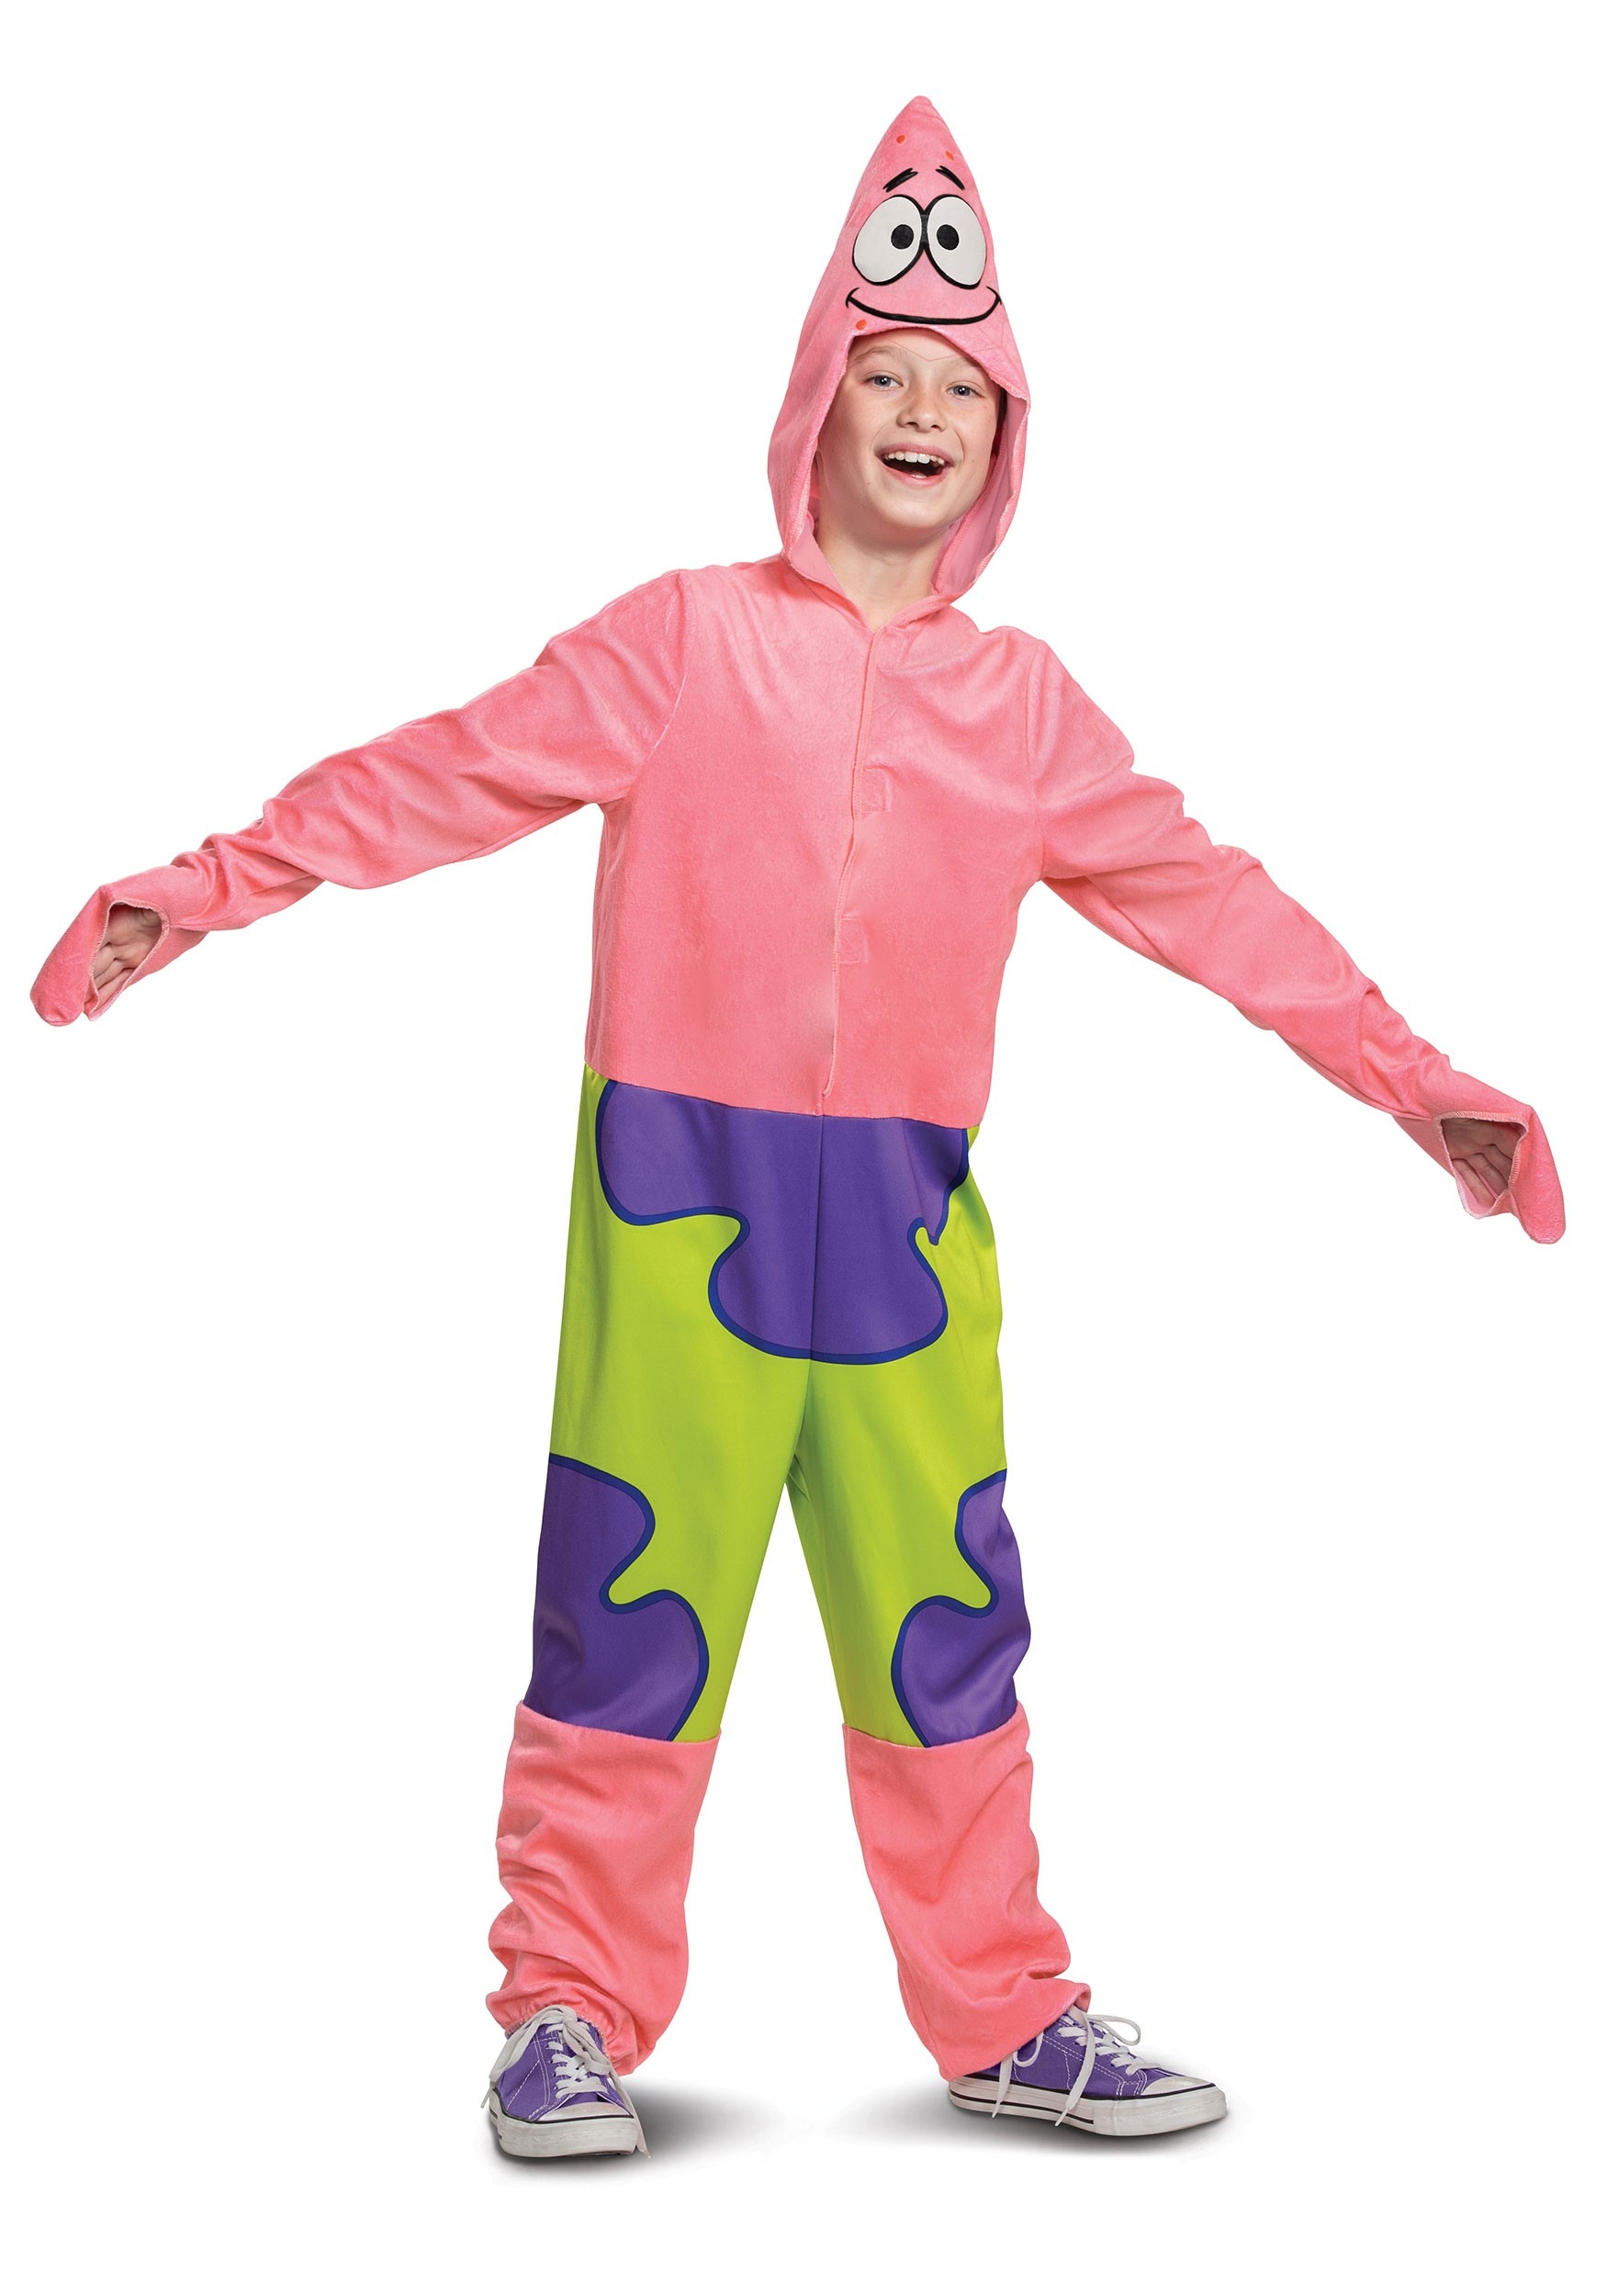 Spongebob SquarePants Costume For Kids